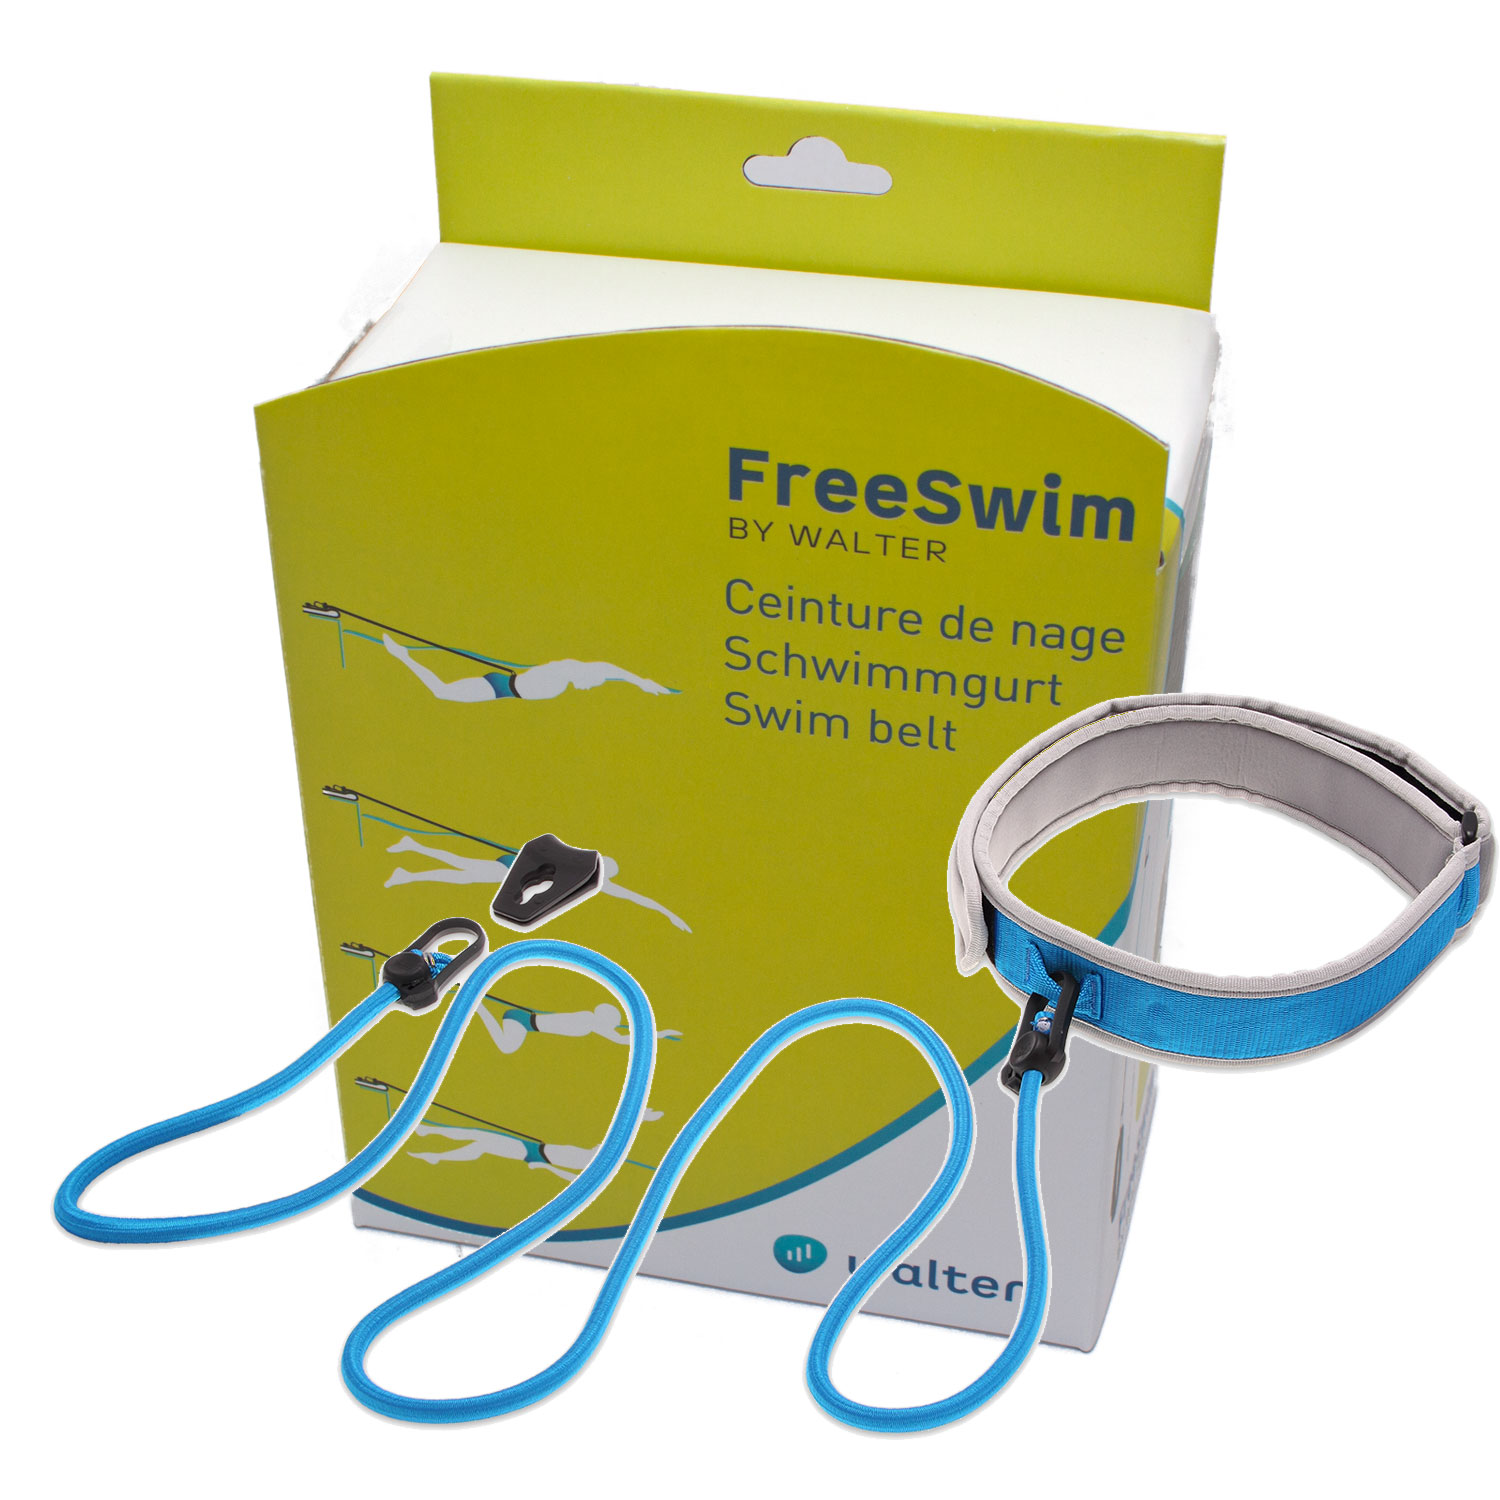 Free Swim Schwimmgurt